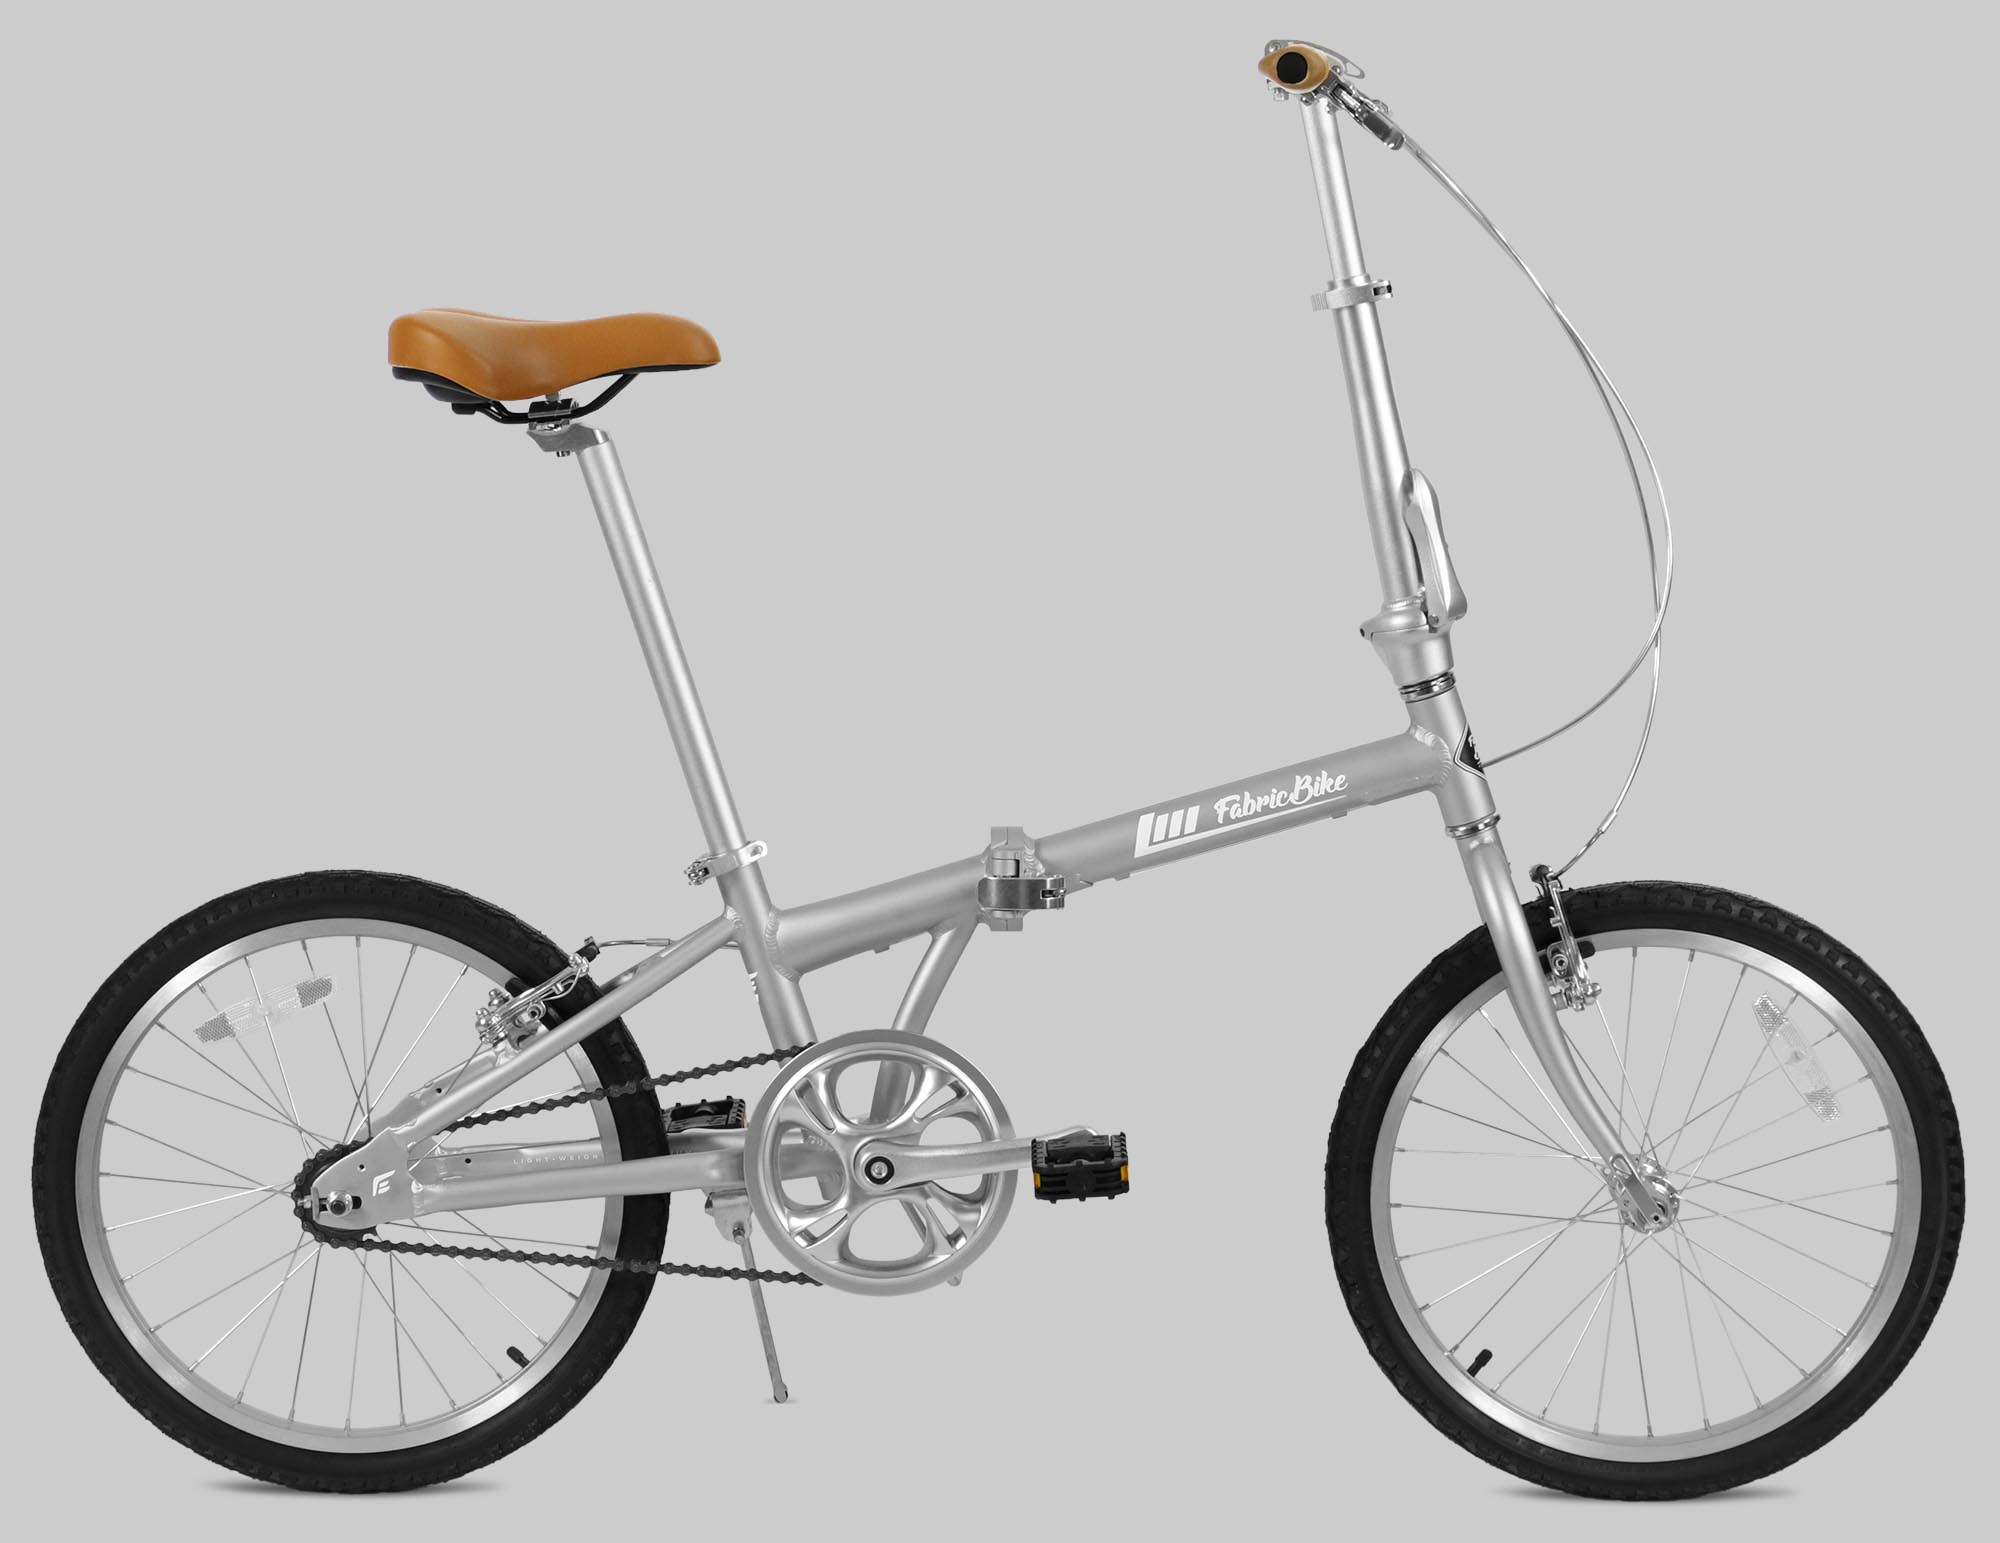 minusválido tengo hambre Anuncio Bicicleta Plegable Fabric Folding | Tienda de bicis FabricBike.com